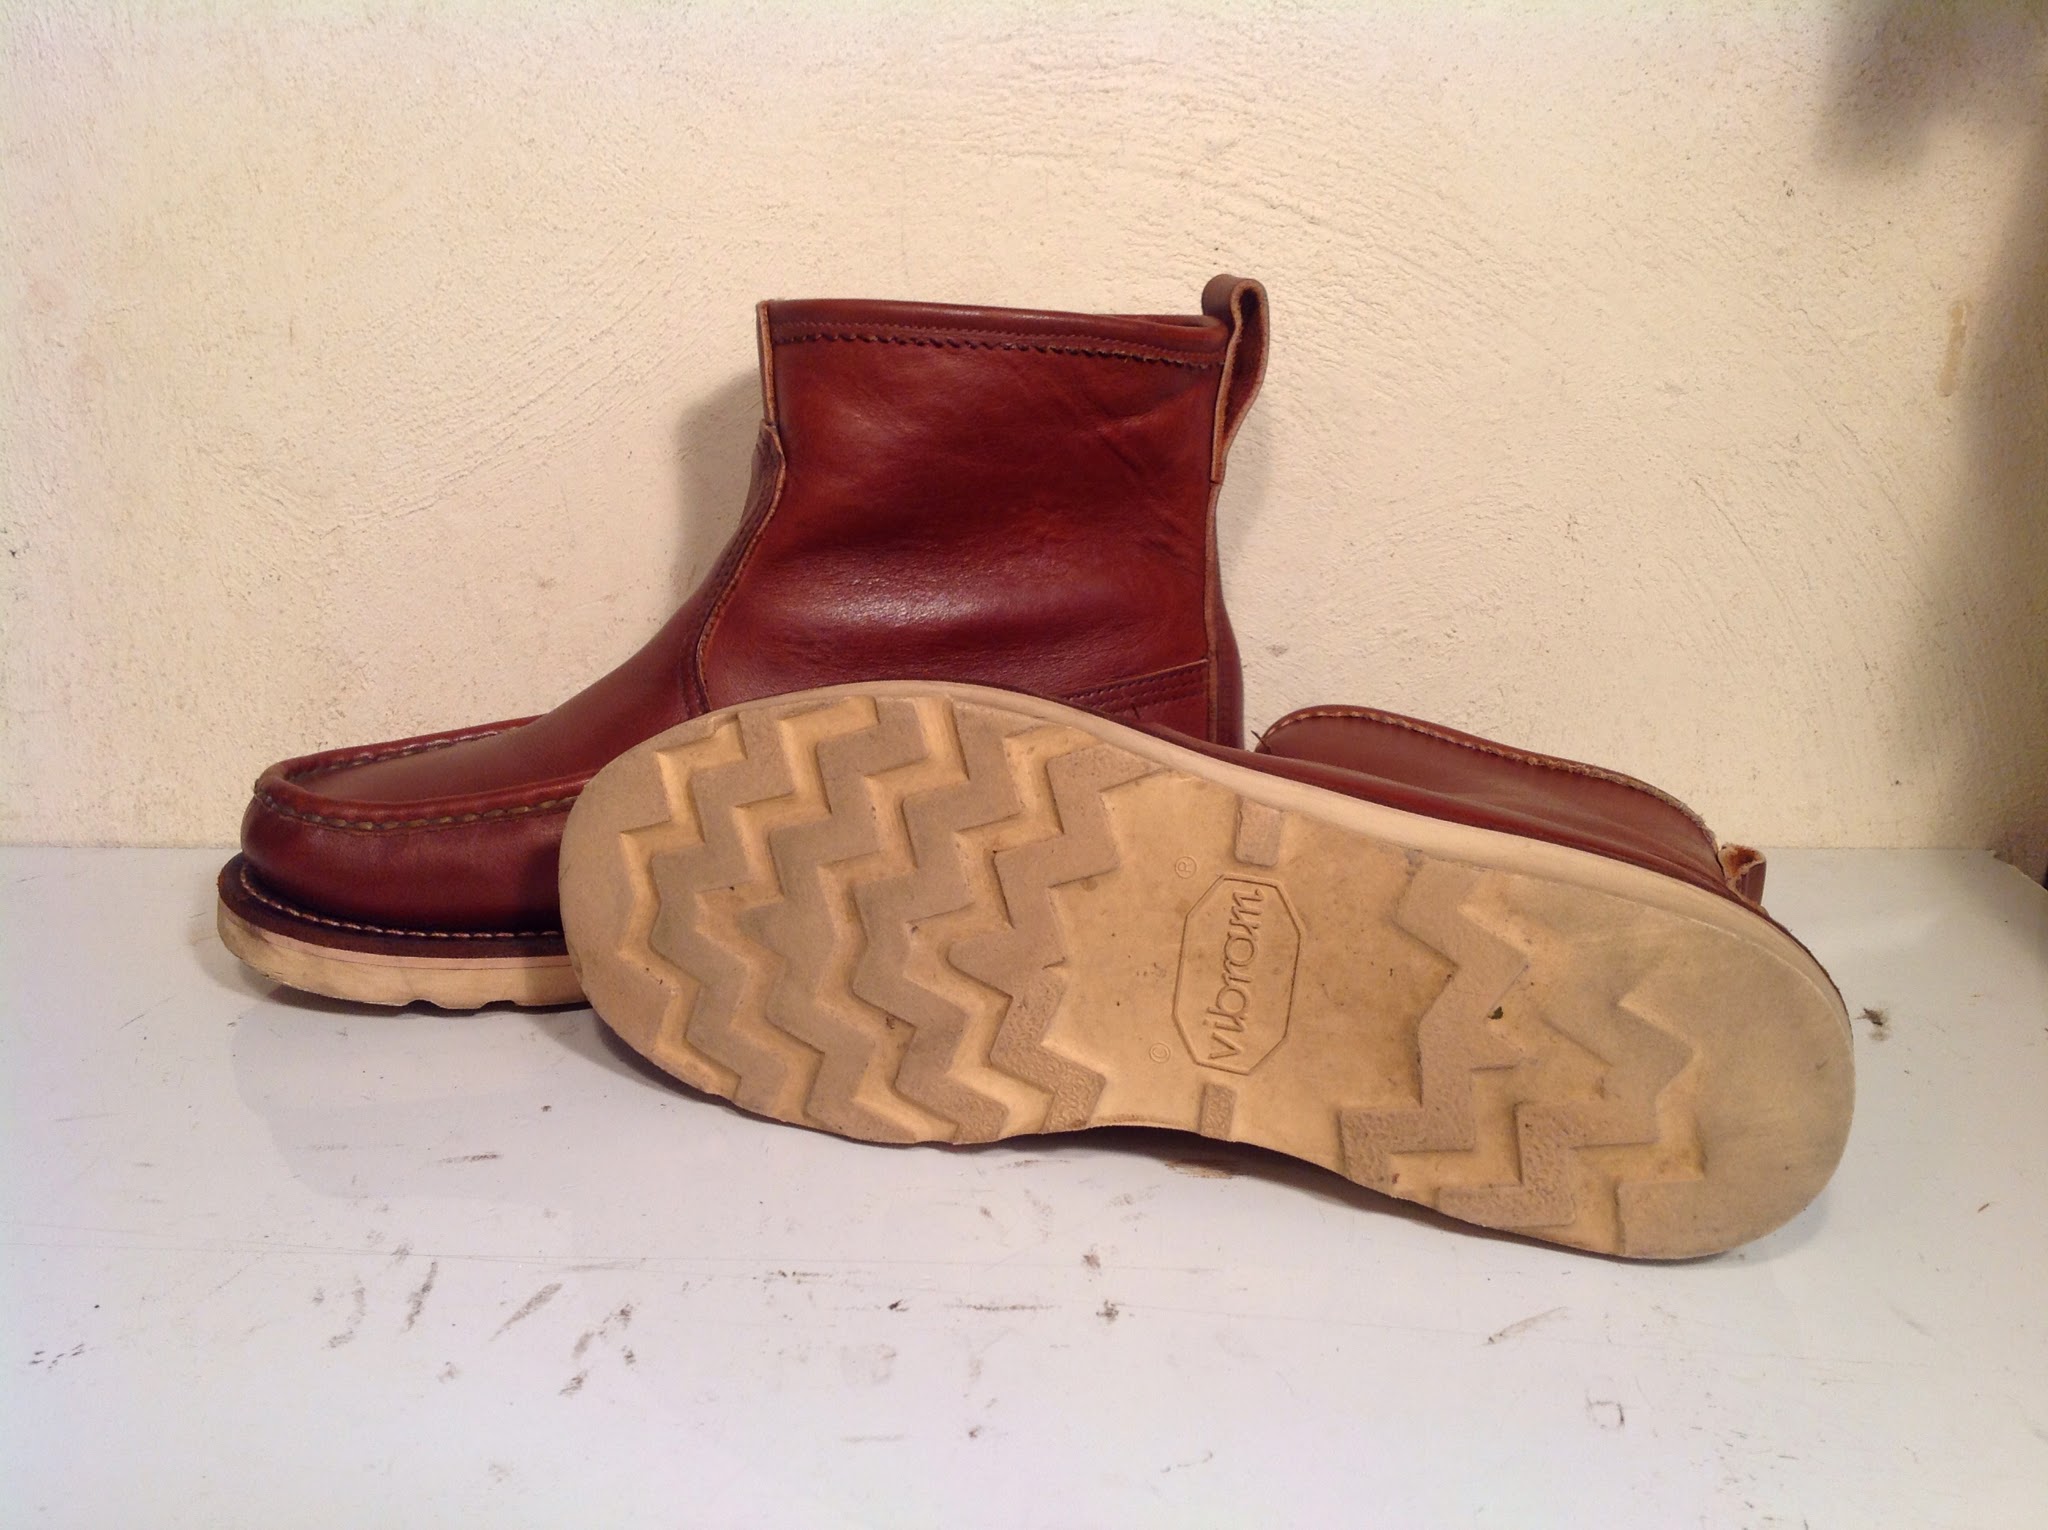 tonearmトーンアーム 吉祥寺のオーダー靴と靴修理のお店: RUSSELL MOCCASIN ラッセルモカシン オールソール バックル製作